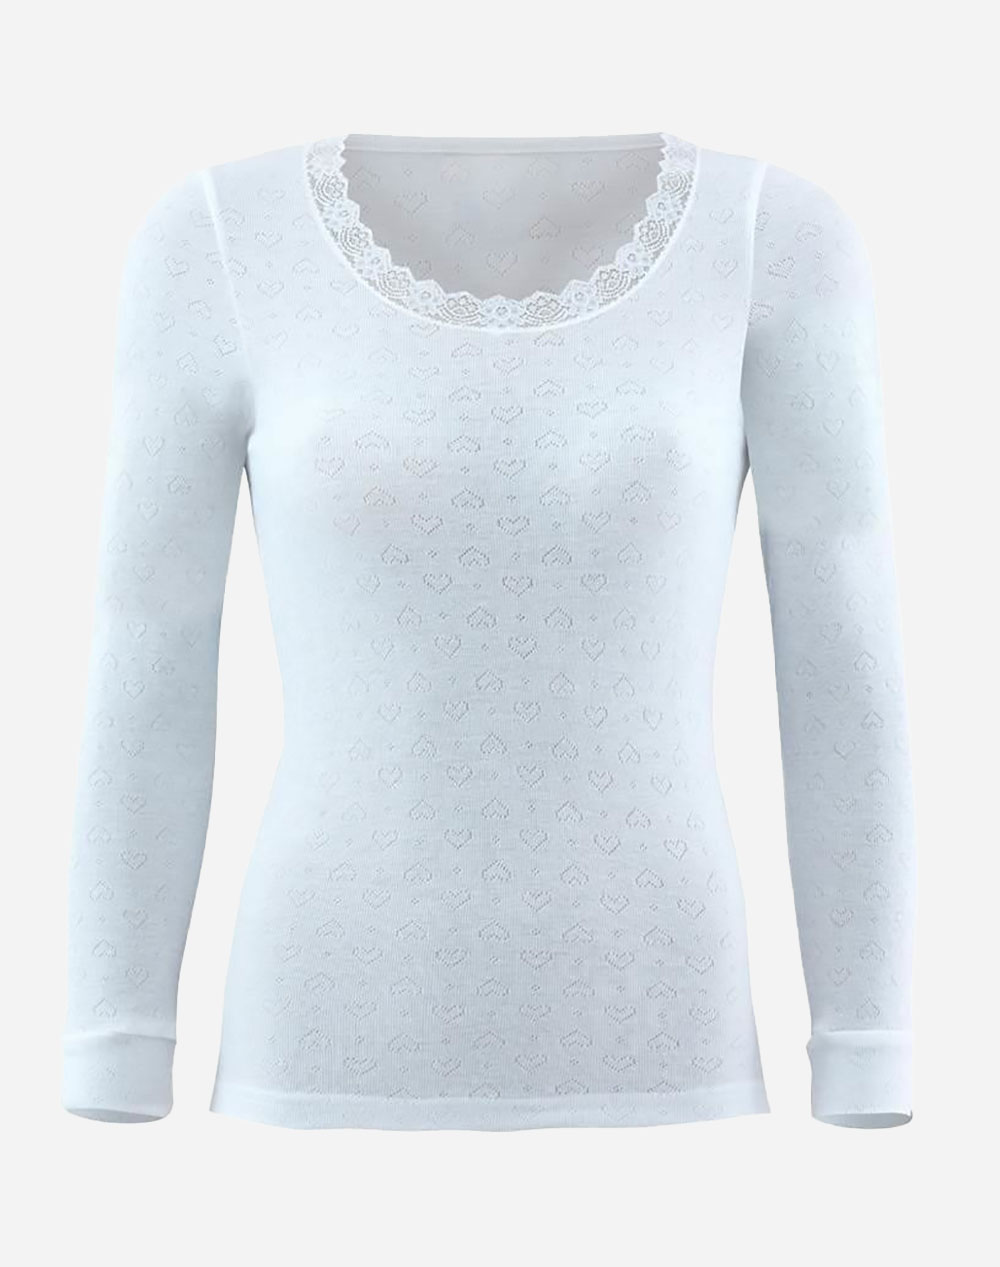 BLACKSPADE Thermal All Seasons Women T-Shirt Long Slv 1268 14.01.39.006-Snow White White 3510P0BLA1200003_50006